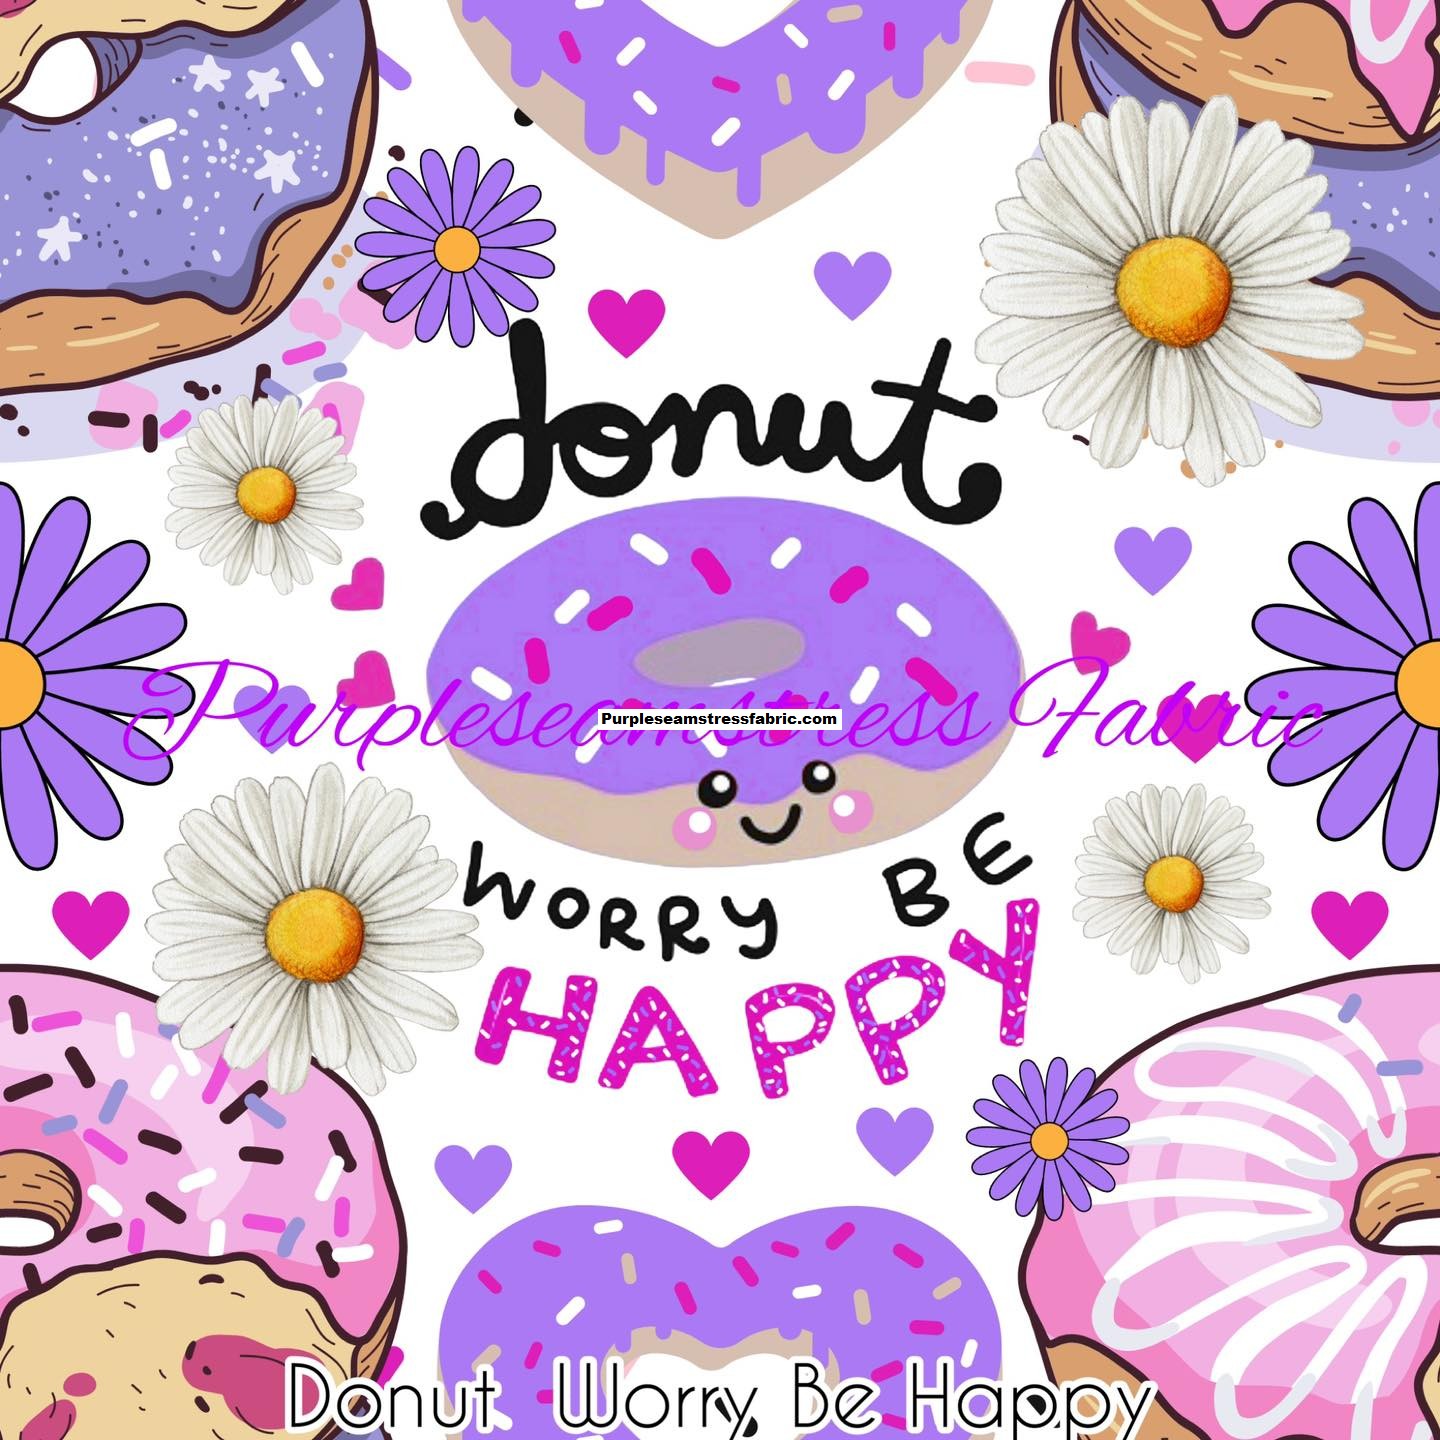 A sprinkled donut on a pink background photo – Wallpaper Image on Unsplash